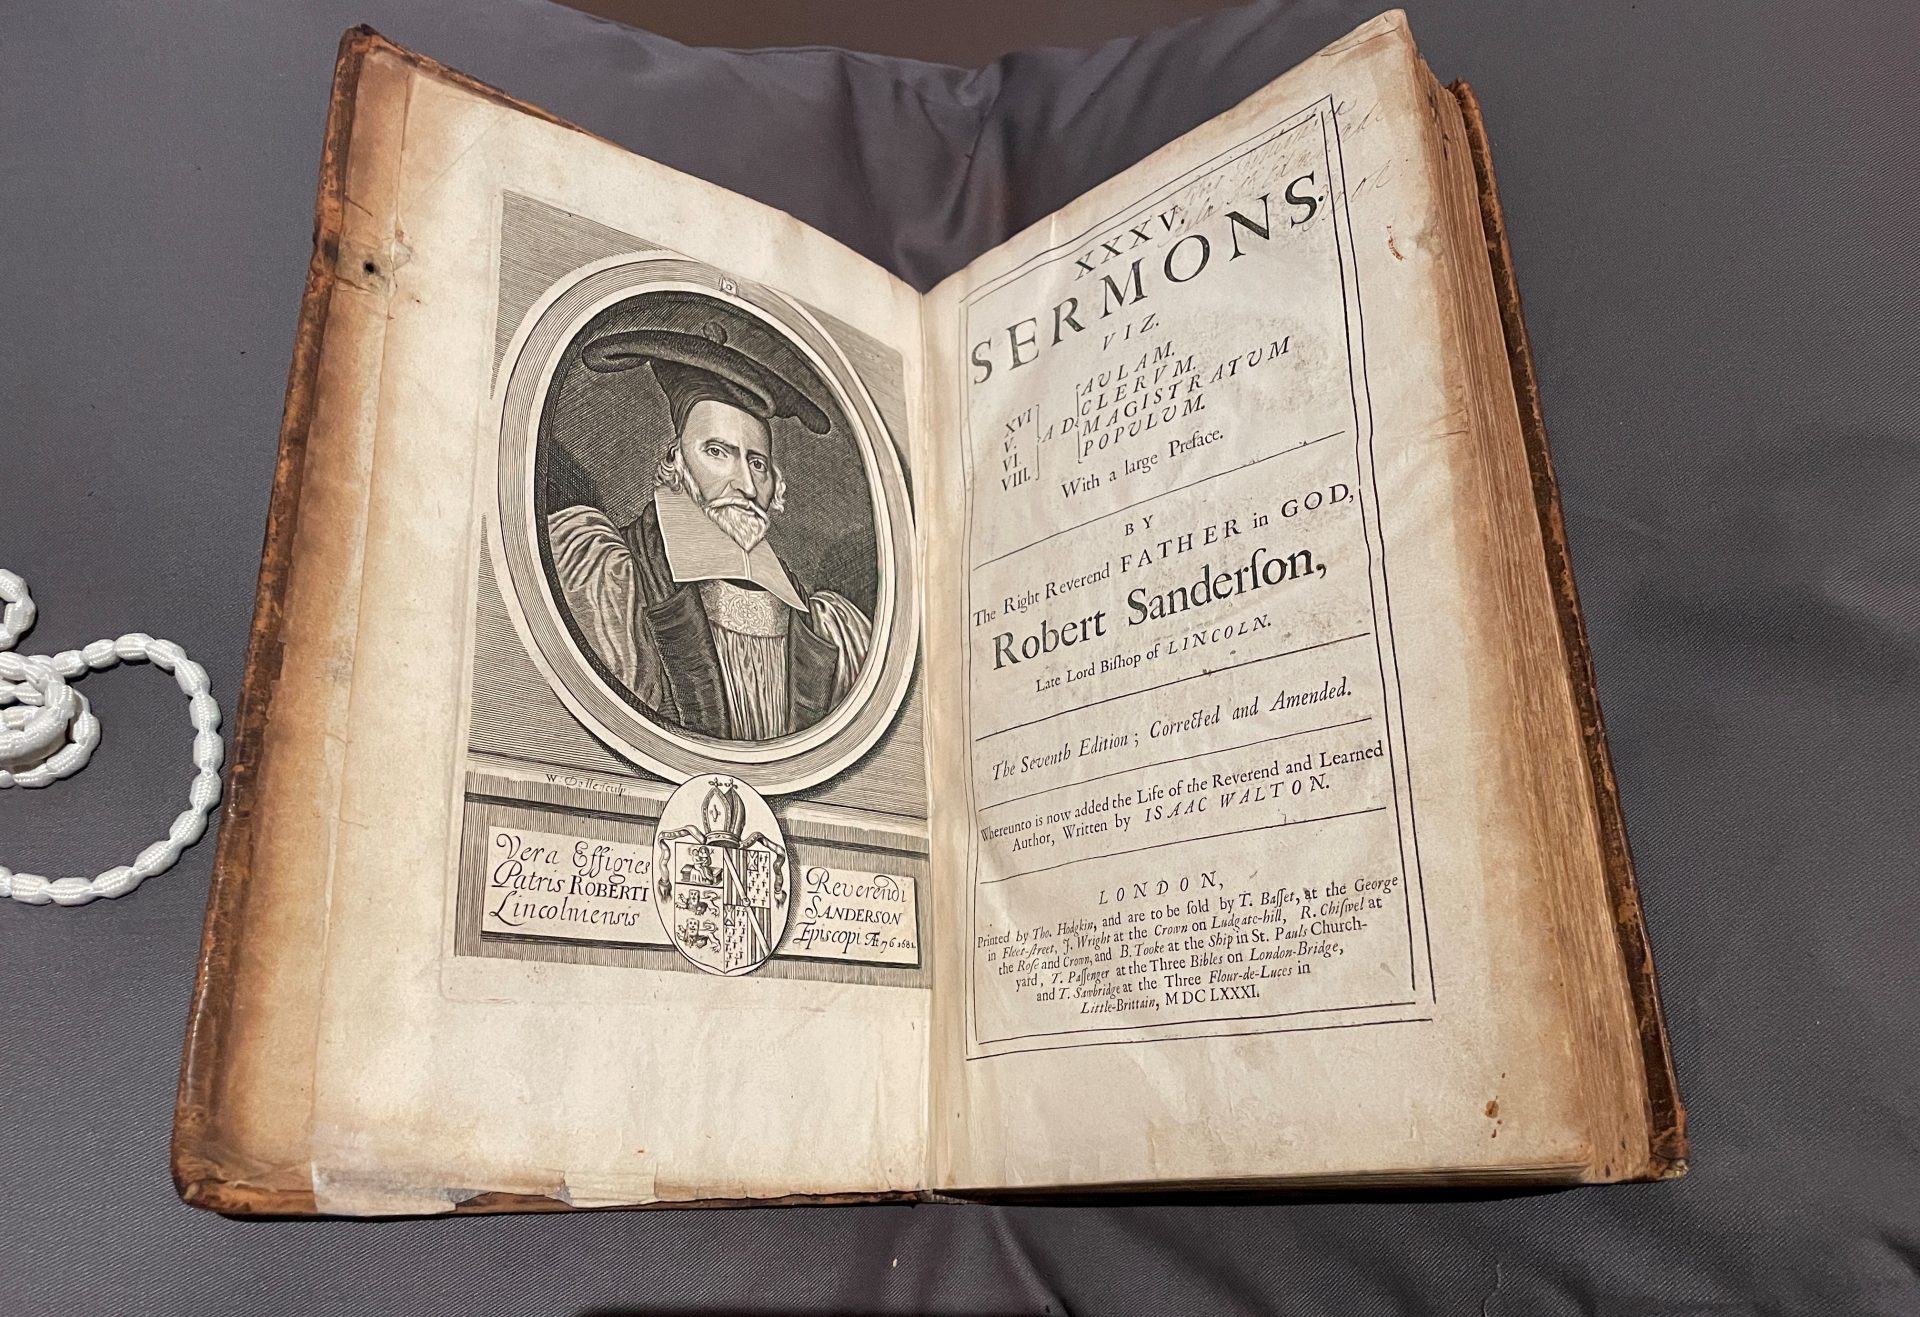 Richard Sanderson, XXXV Sermons (London, 1681, Shelfmark Fol. G 6